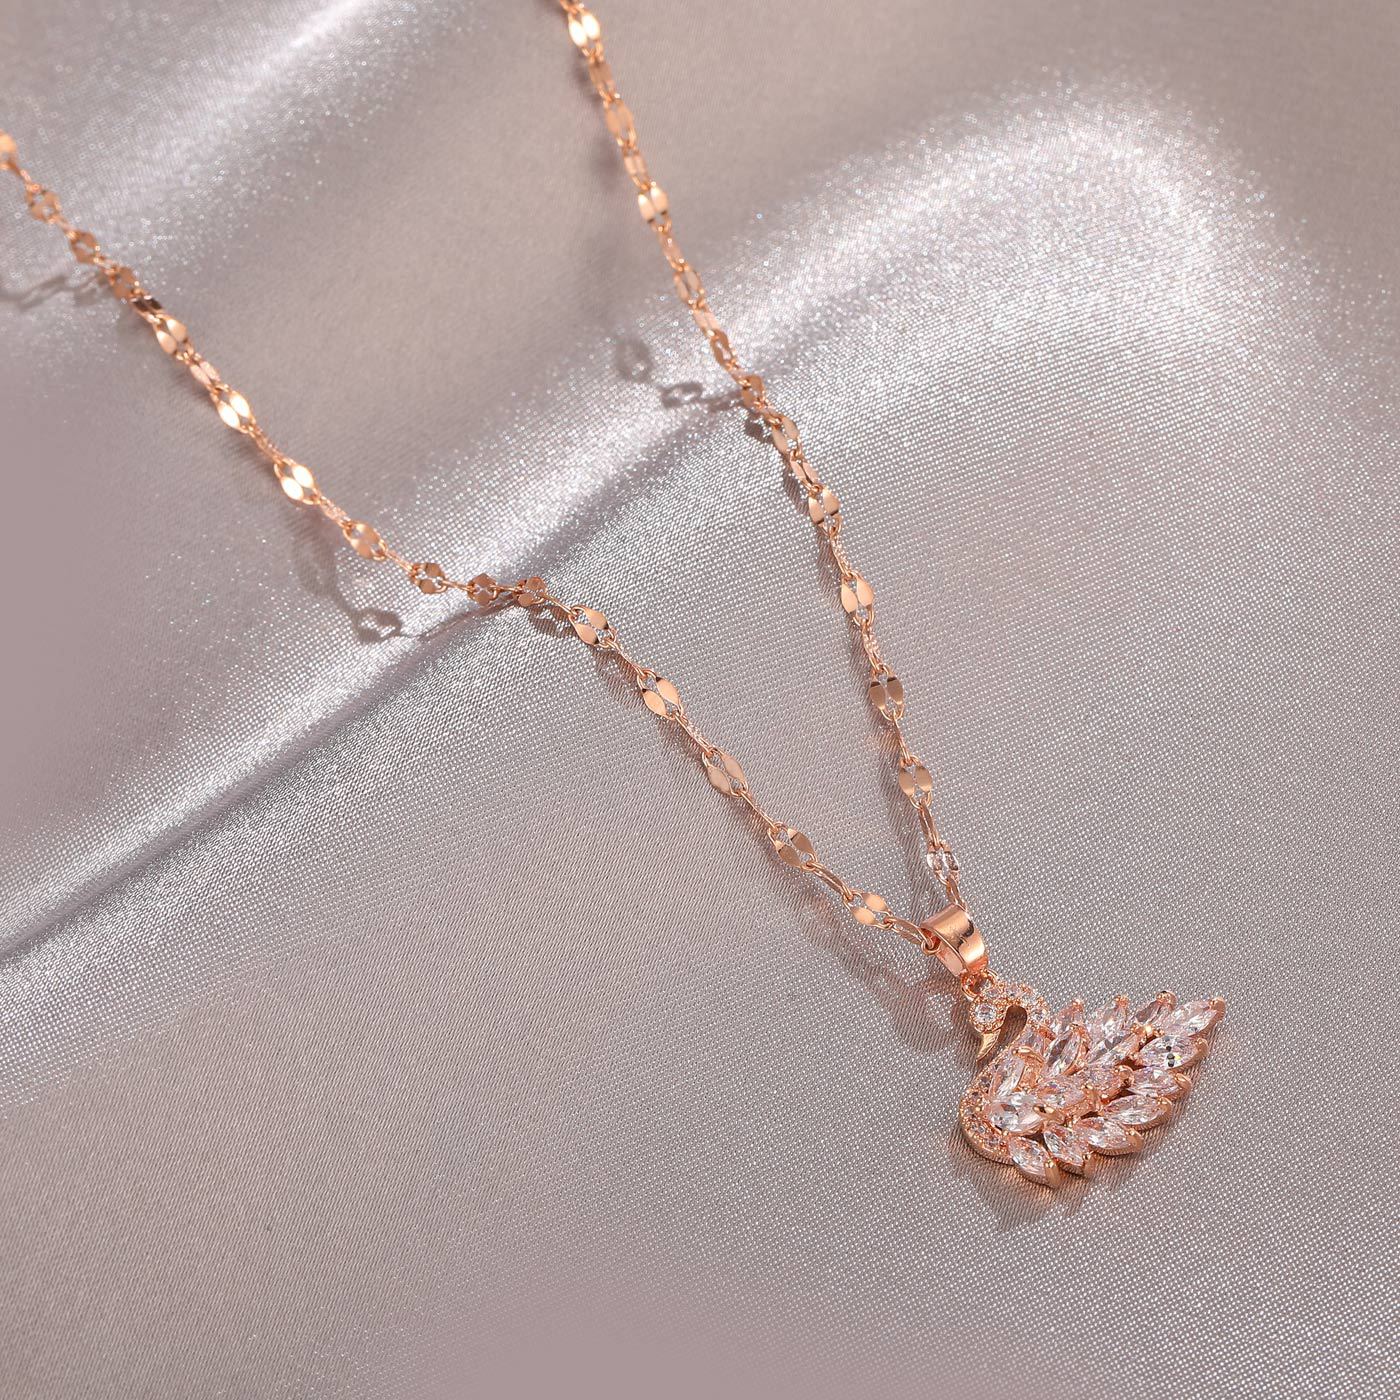 Diamond Swan Pendant Necklace